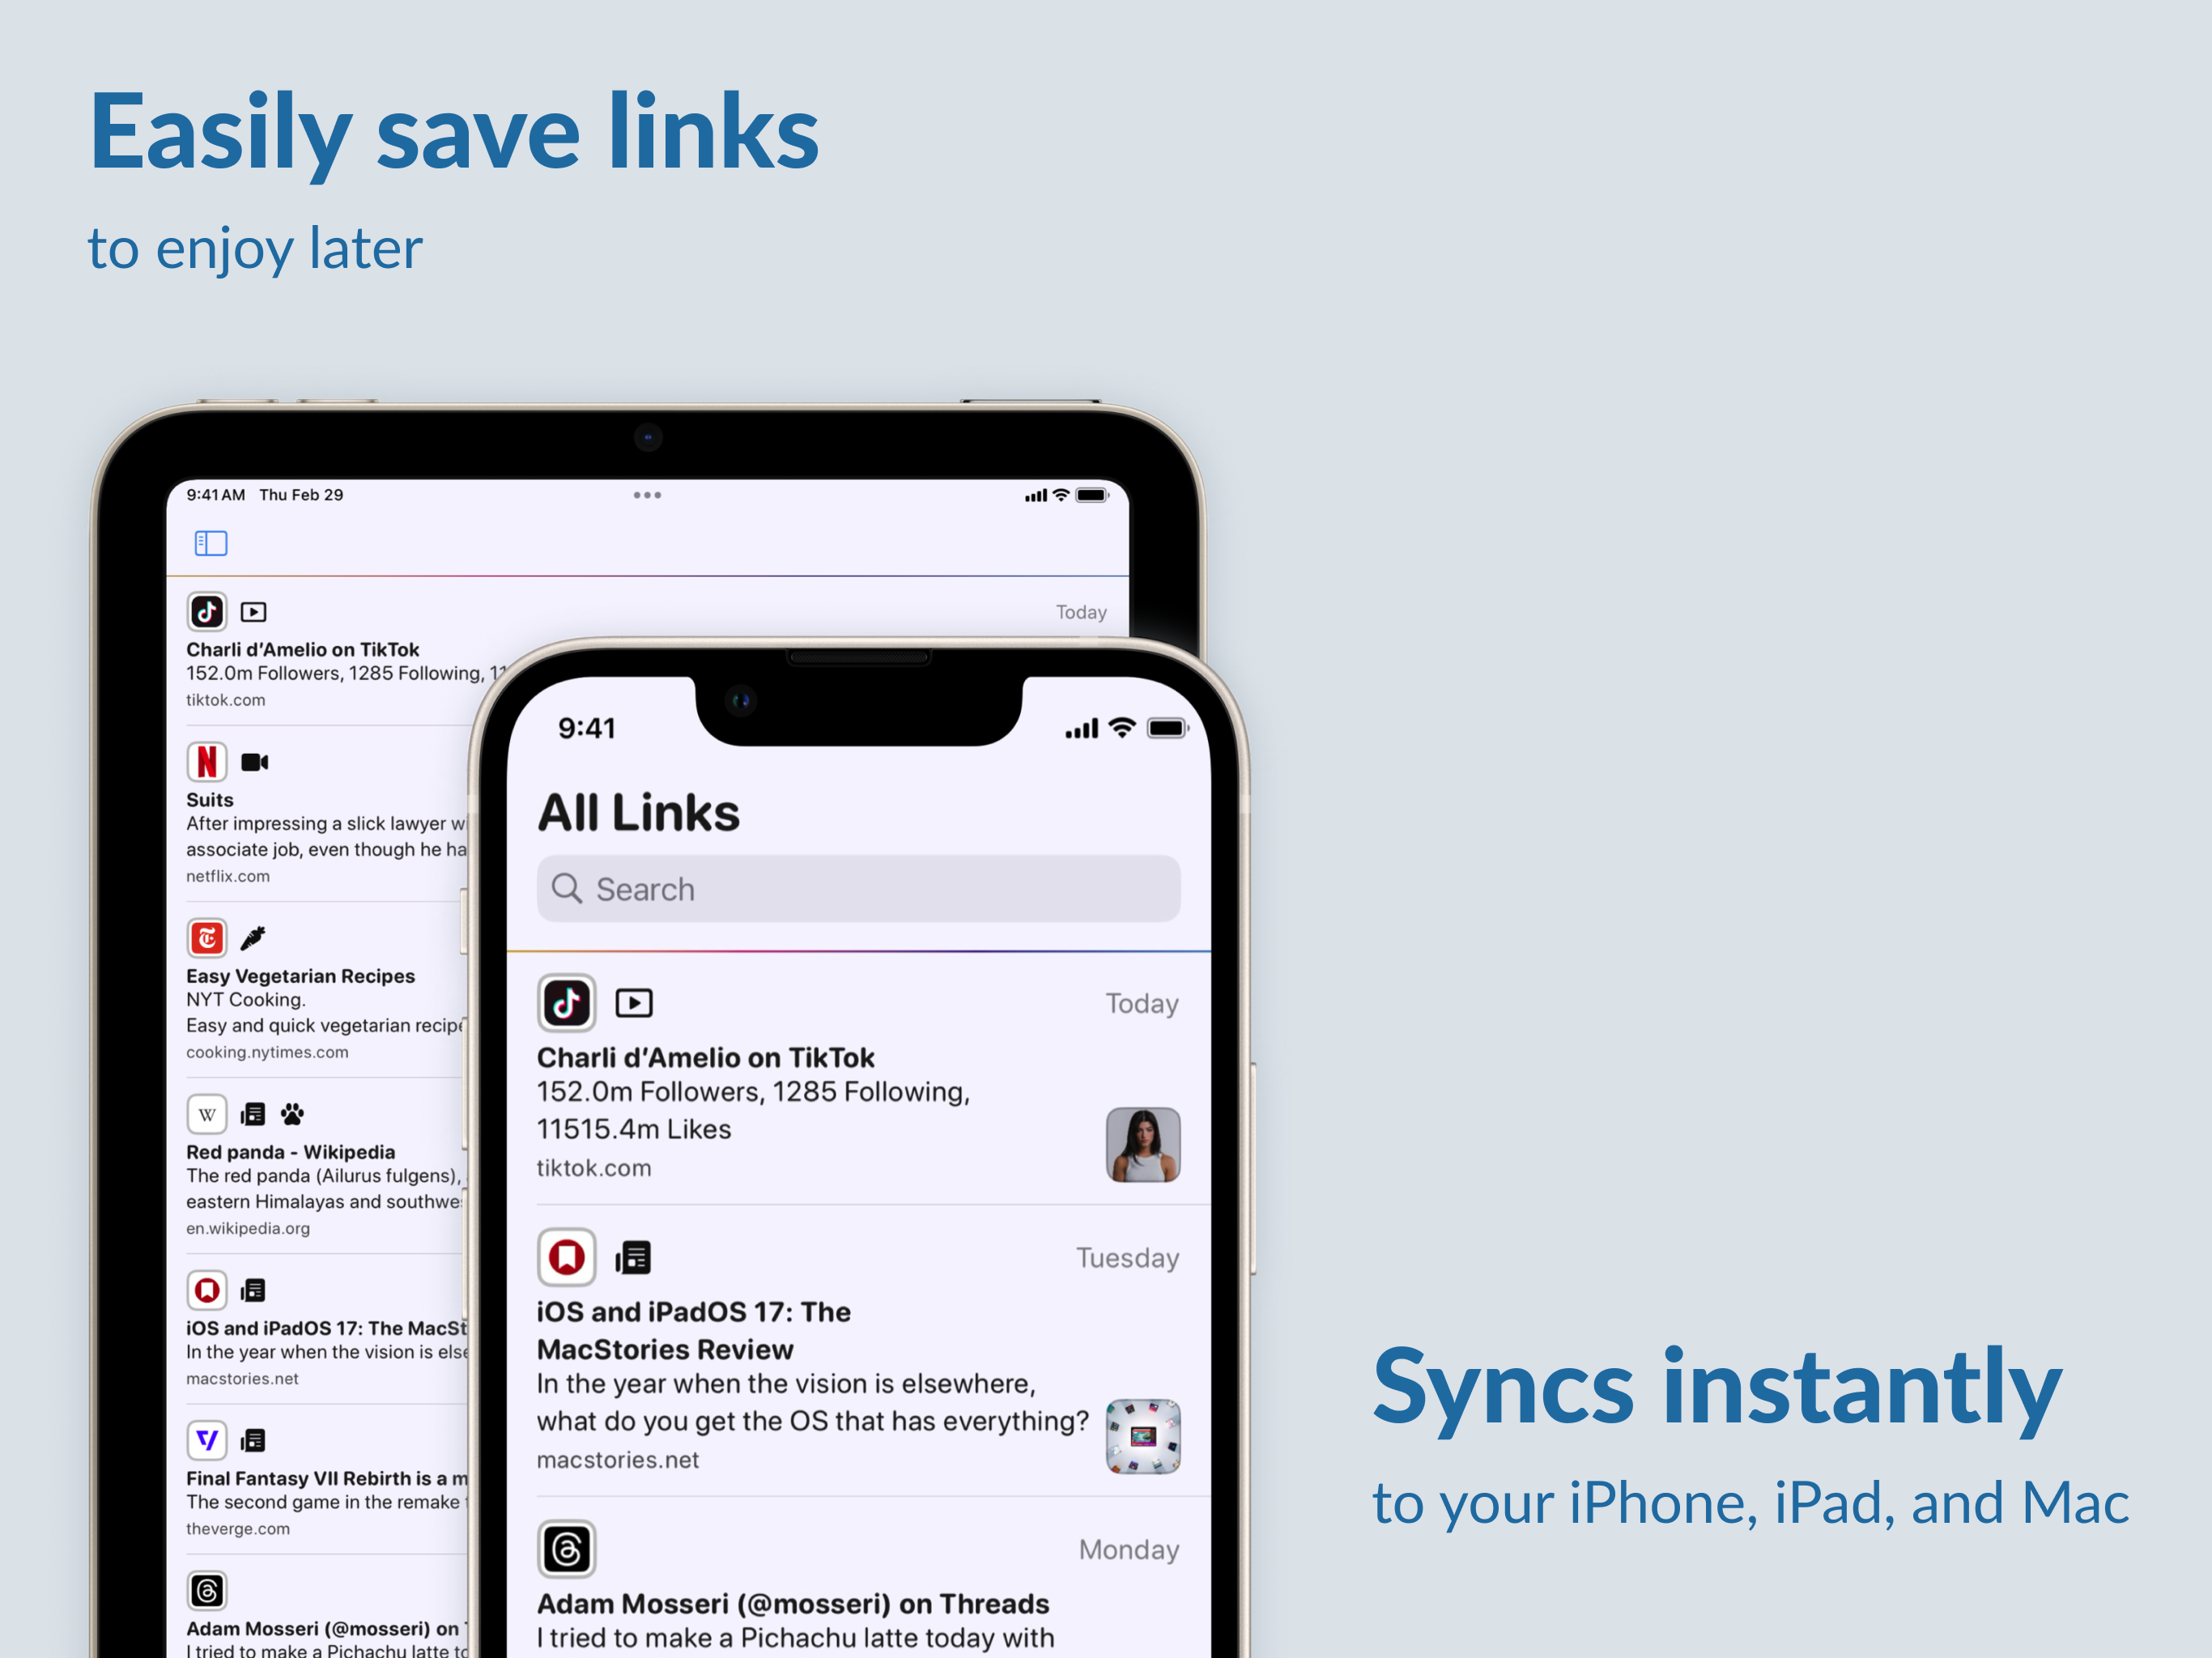 plinky - Easily save links, enjoy them later